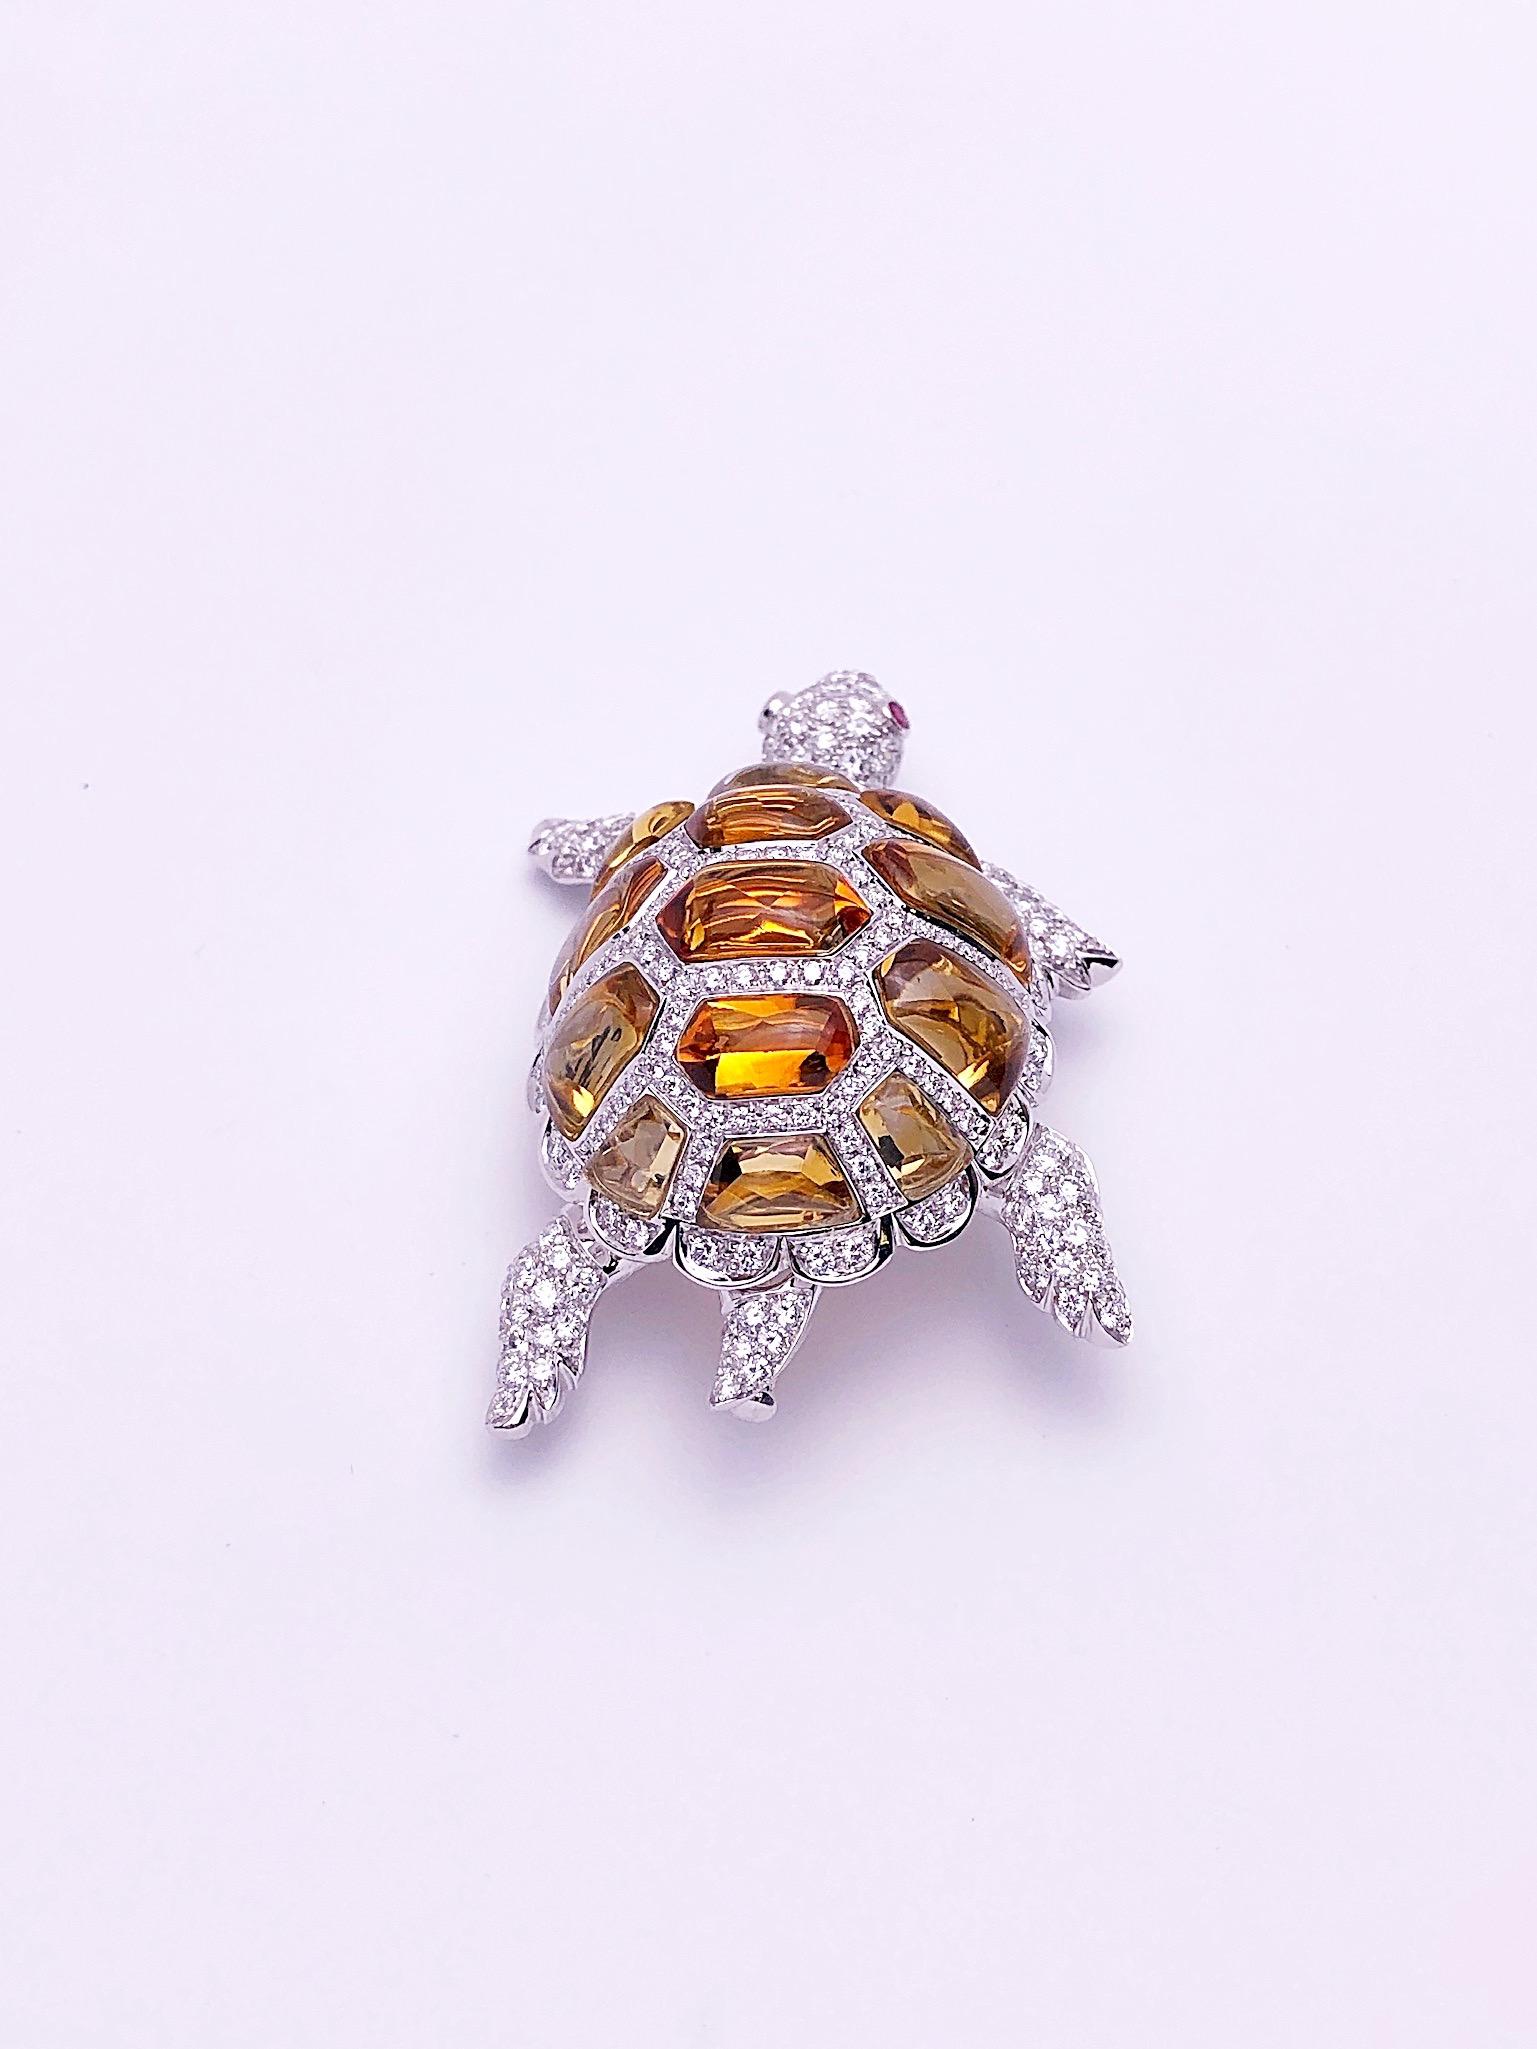 Contemporain Garavelli Broche tortue en or blanc 18 carats et diamants de 4,58 carats avec citrines en vente